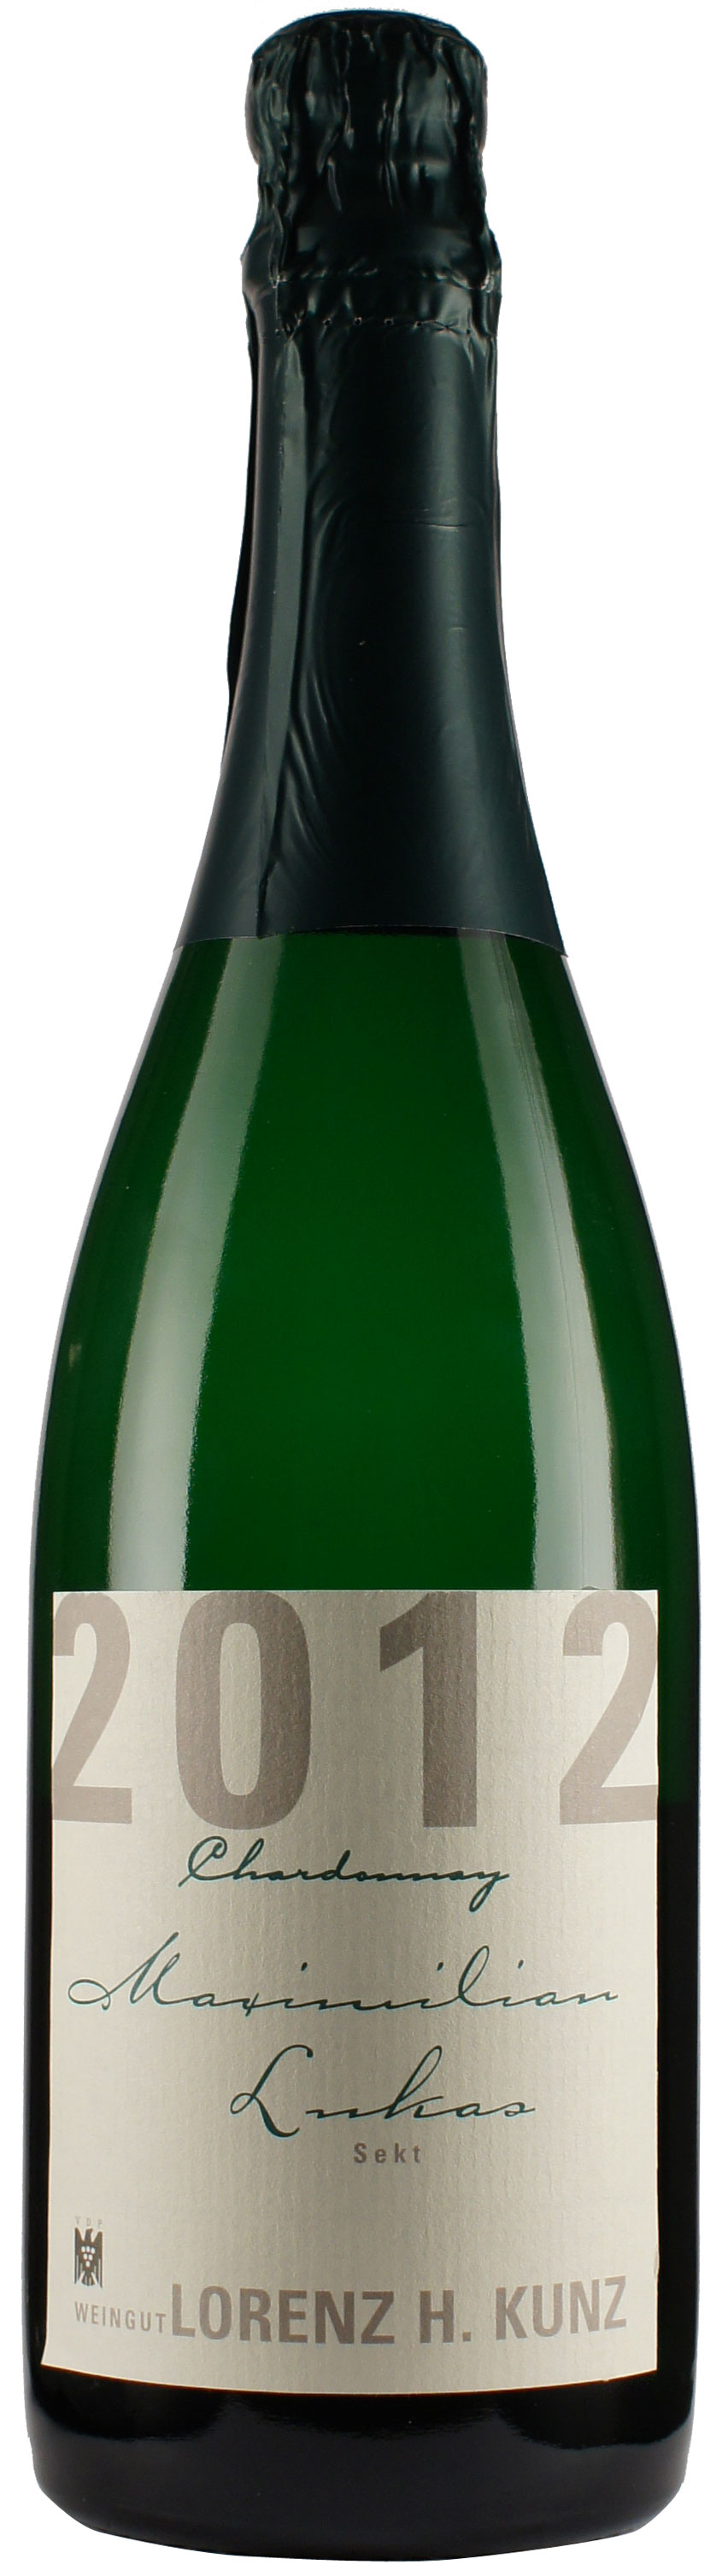 Lorenz Kunz 2012 Chardonnay Sekt